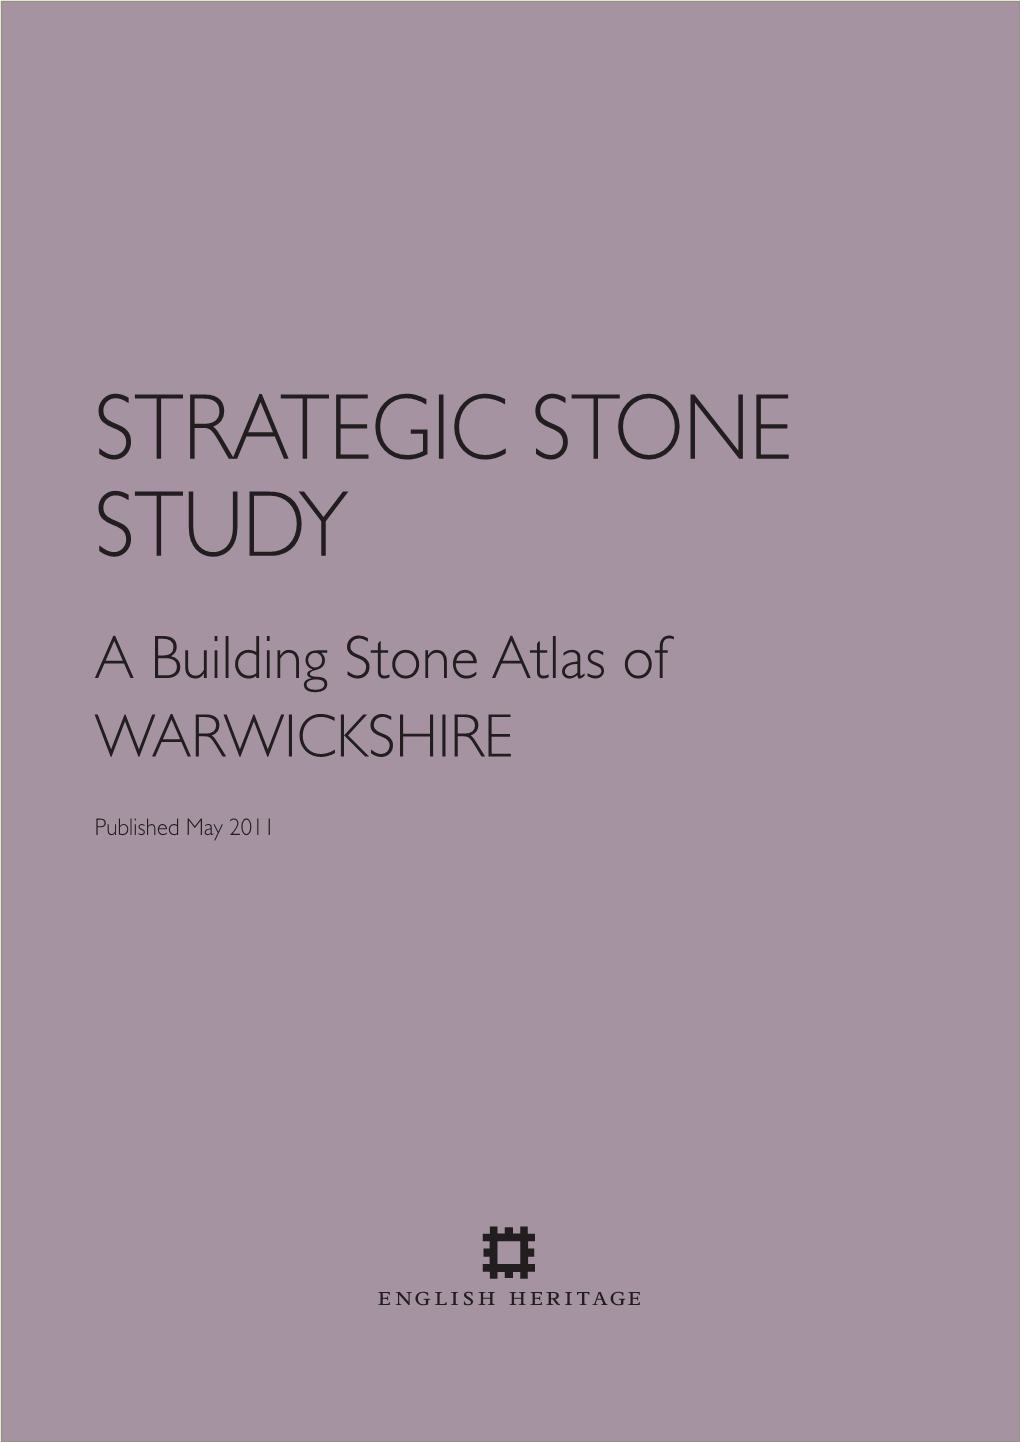 Warwickshire Building Stone Atlas